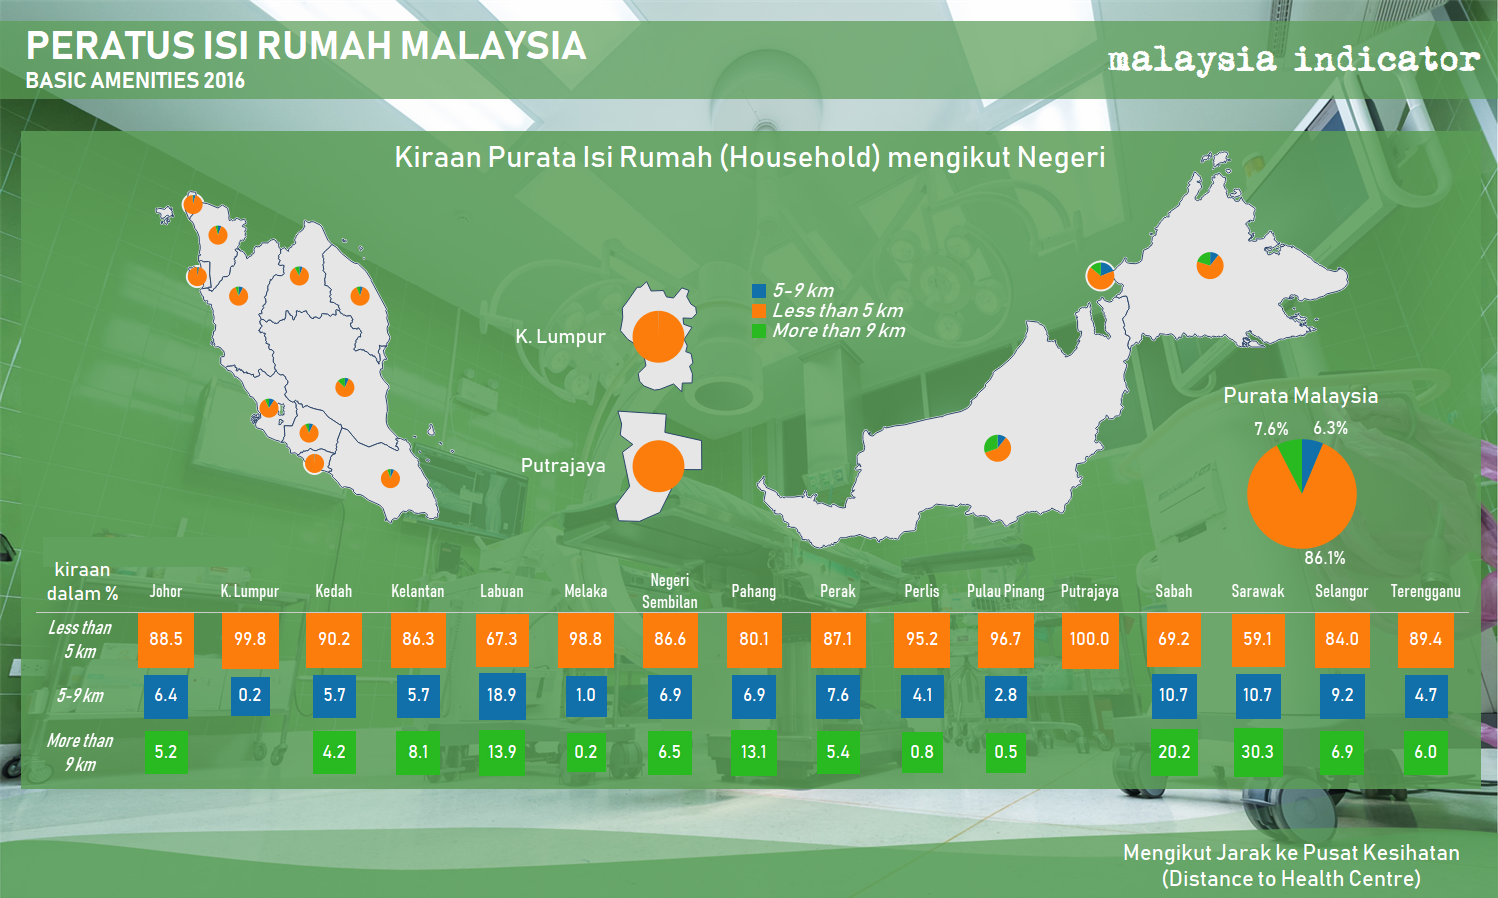 Malaysia, Malaysia Indicator, health, Sarawak